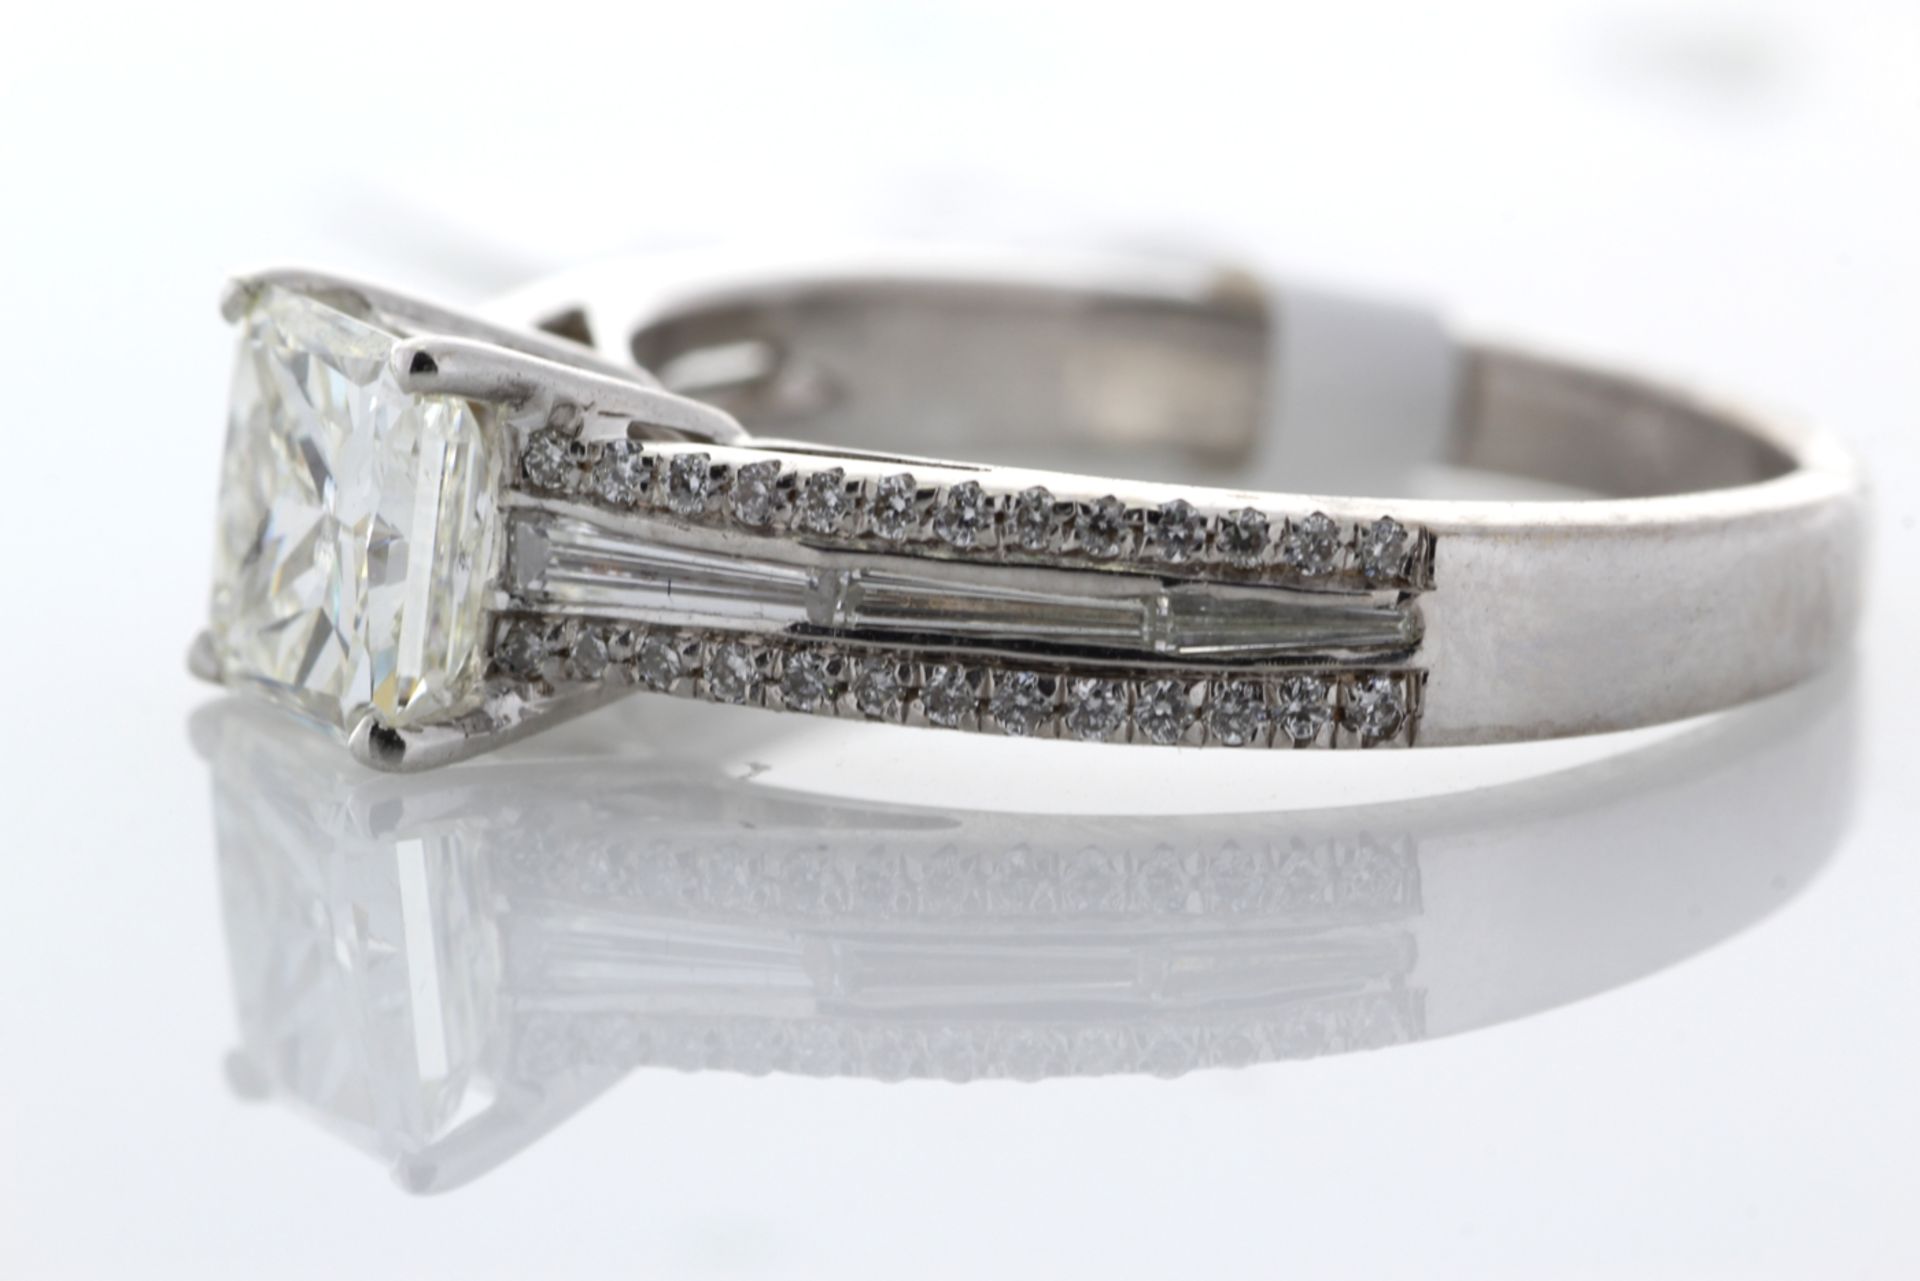 18k White Gold Single Stone Claw Set Princess Cut With Stone Set Shoulders Diamond Ring 1.00(1.35) - Image 2 of 3